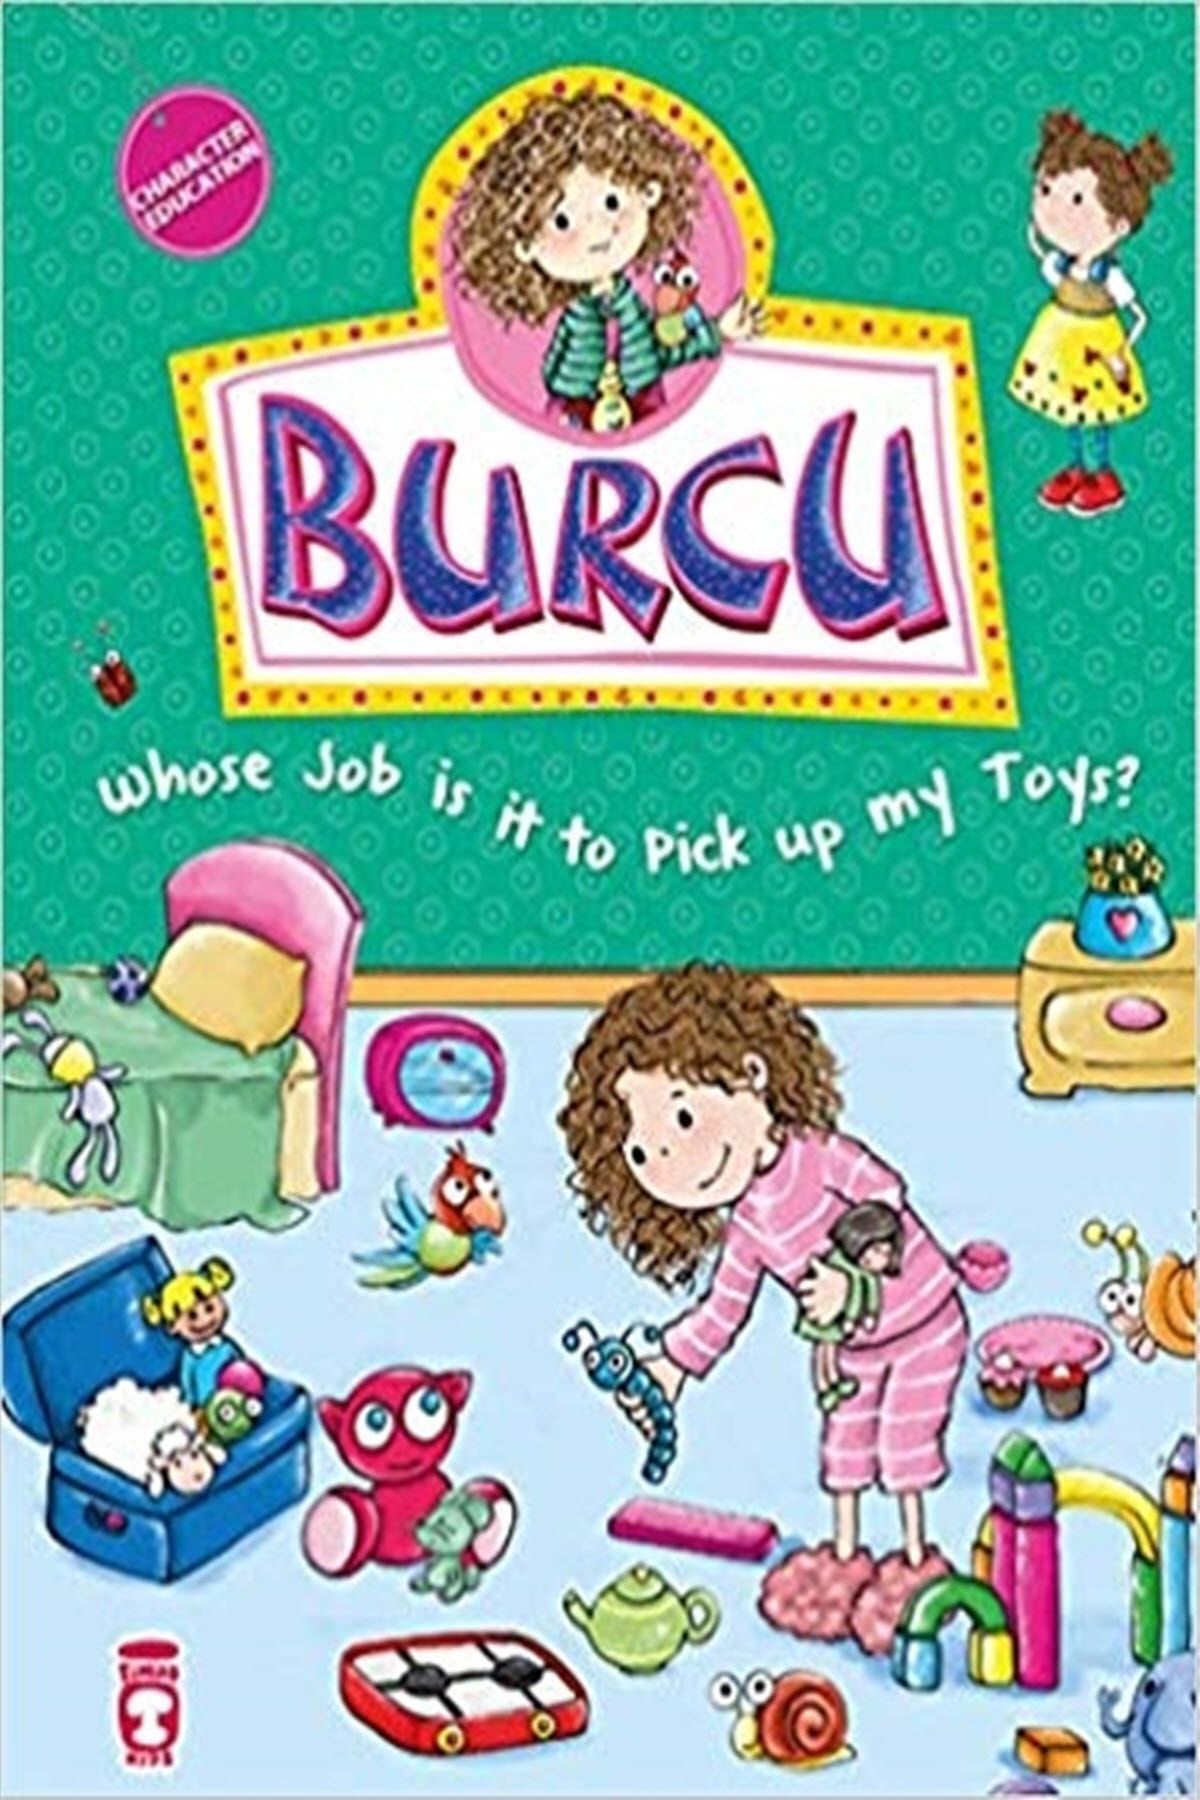 Timaş Yayınları Burcu - Whose Job is it to Pick up my Toys? - Nurşen Şirin